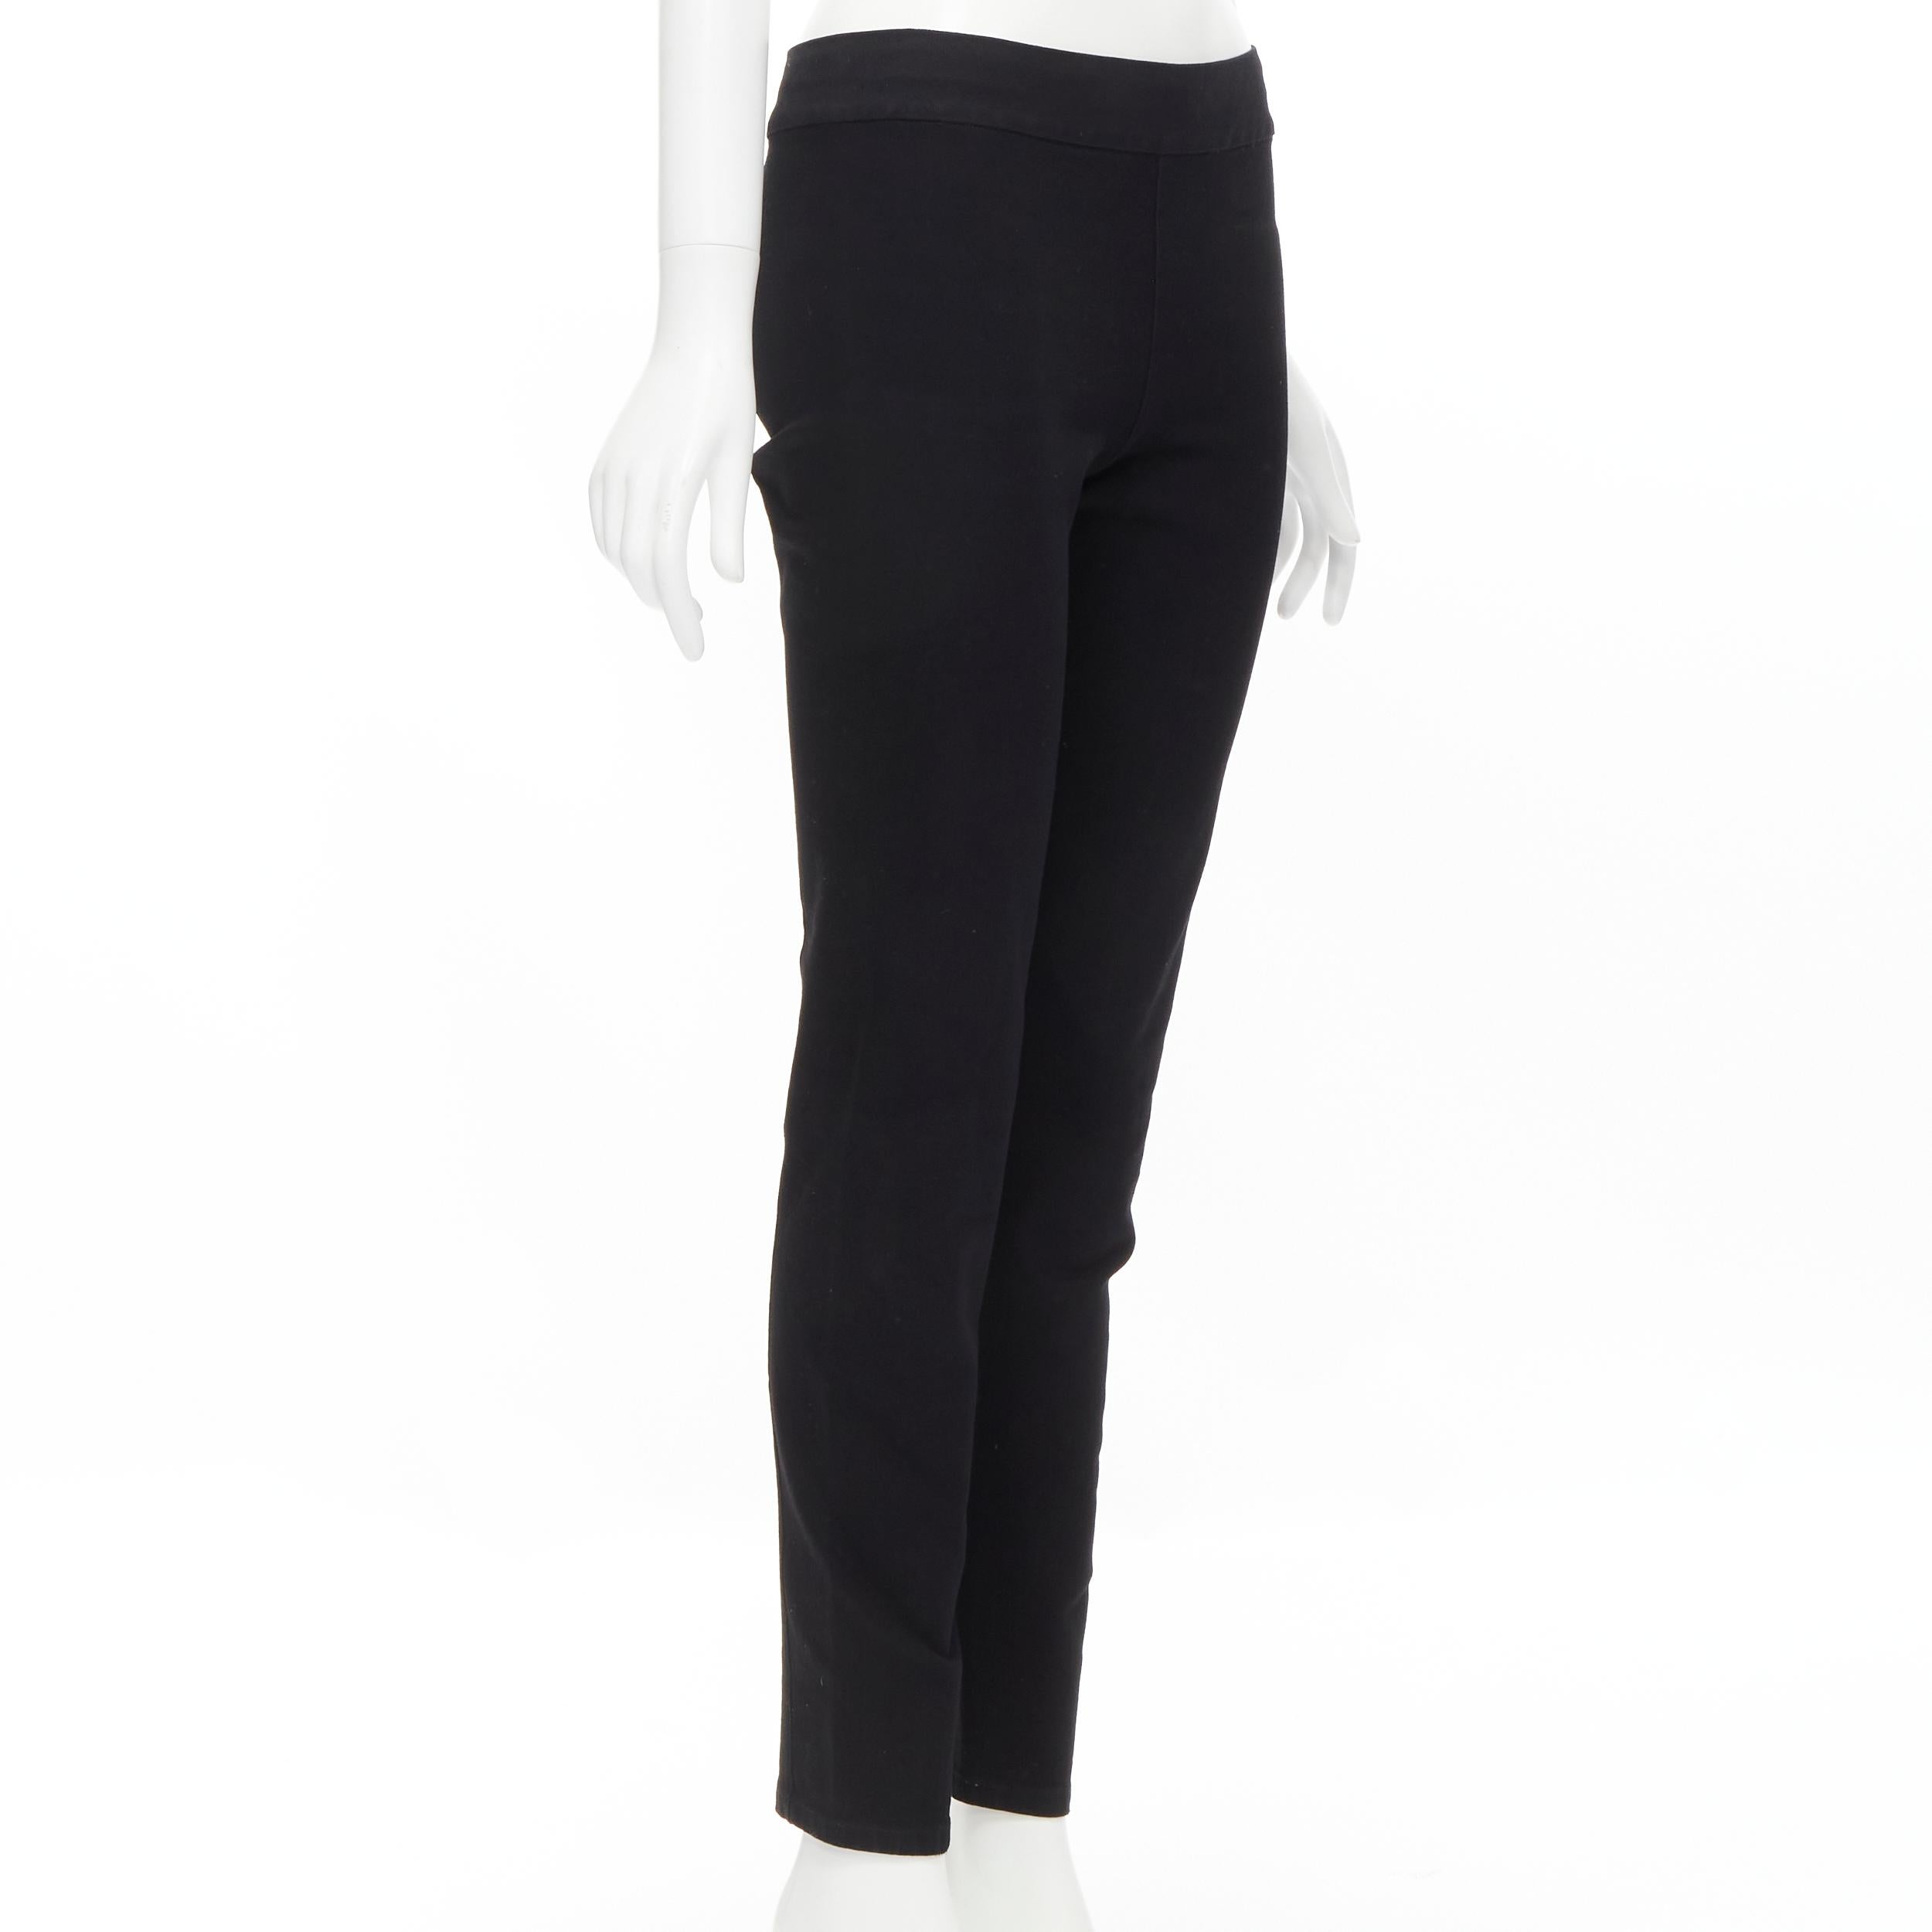 Black THE ROW black soft cotton stretch fit minimal legging pants S For Sale